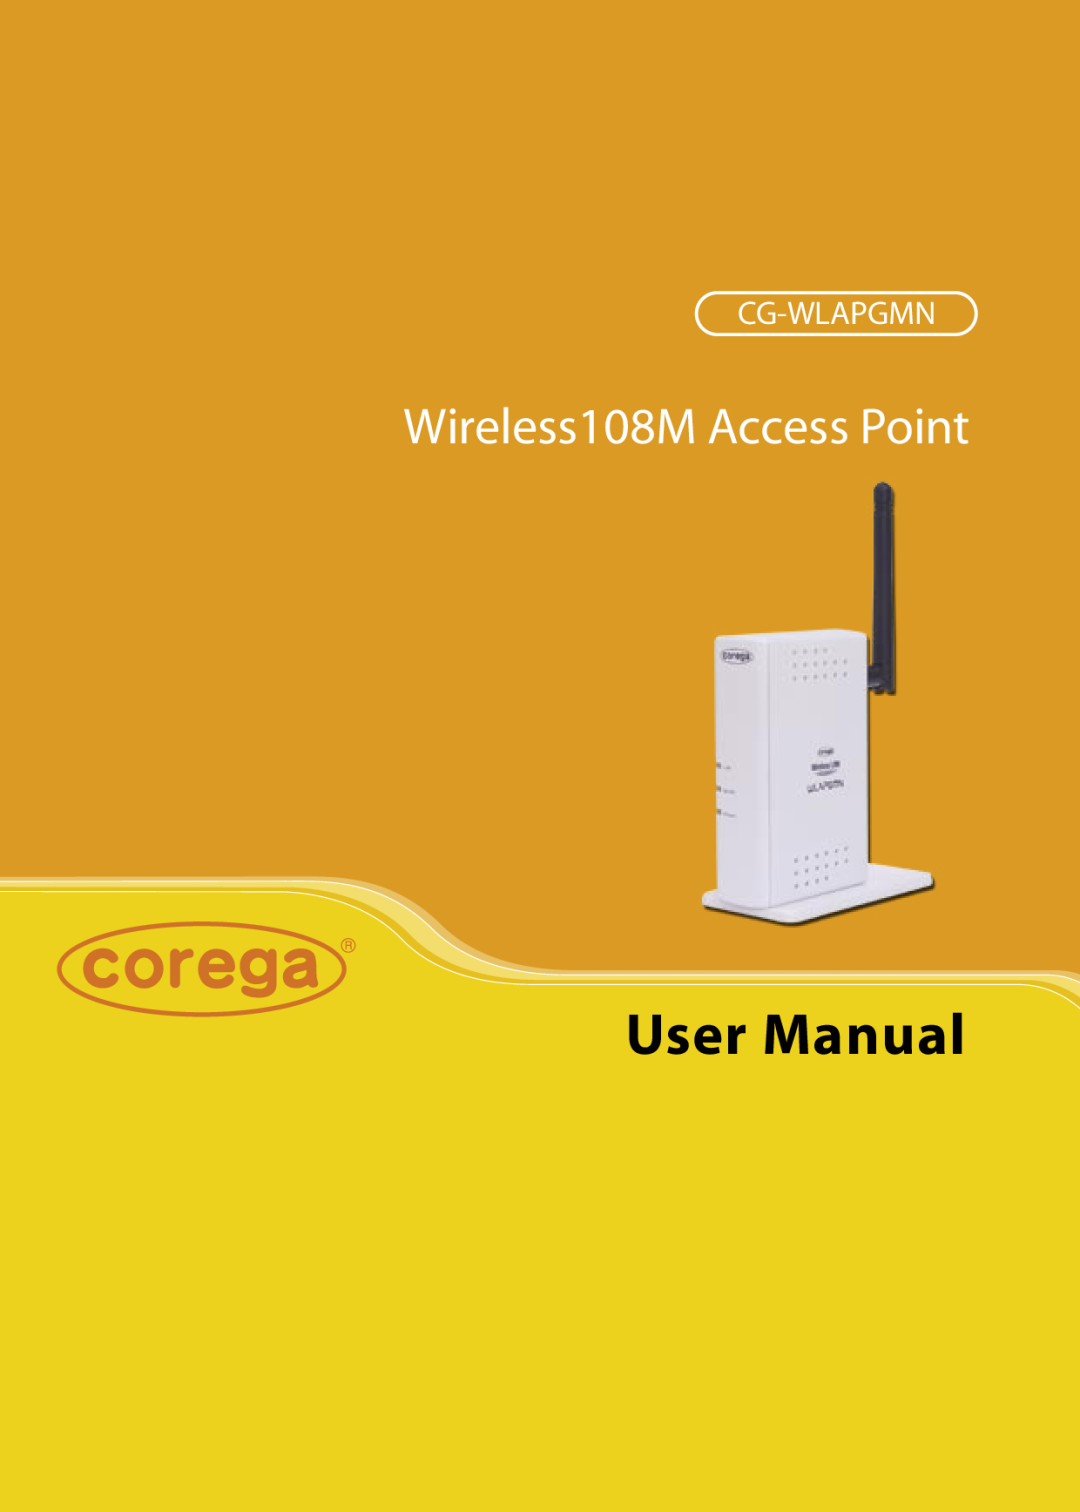 Corega CG-WLAPGMN user manual User Manual, Wireless108M Access Point, Cg-Wlapgmn 